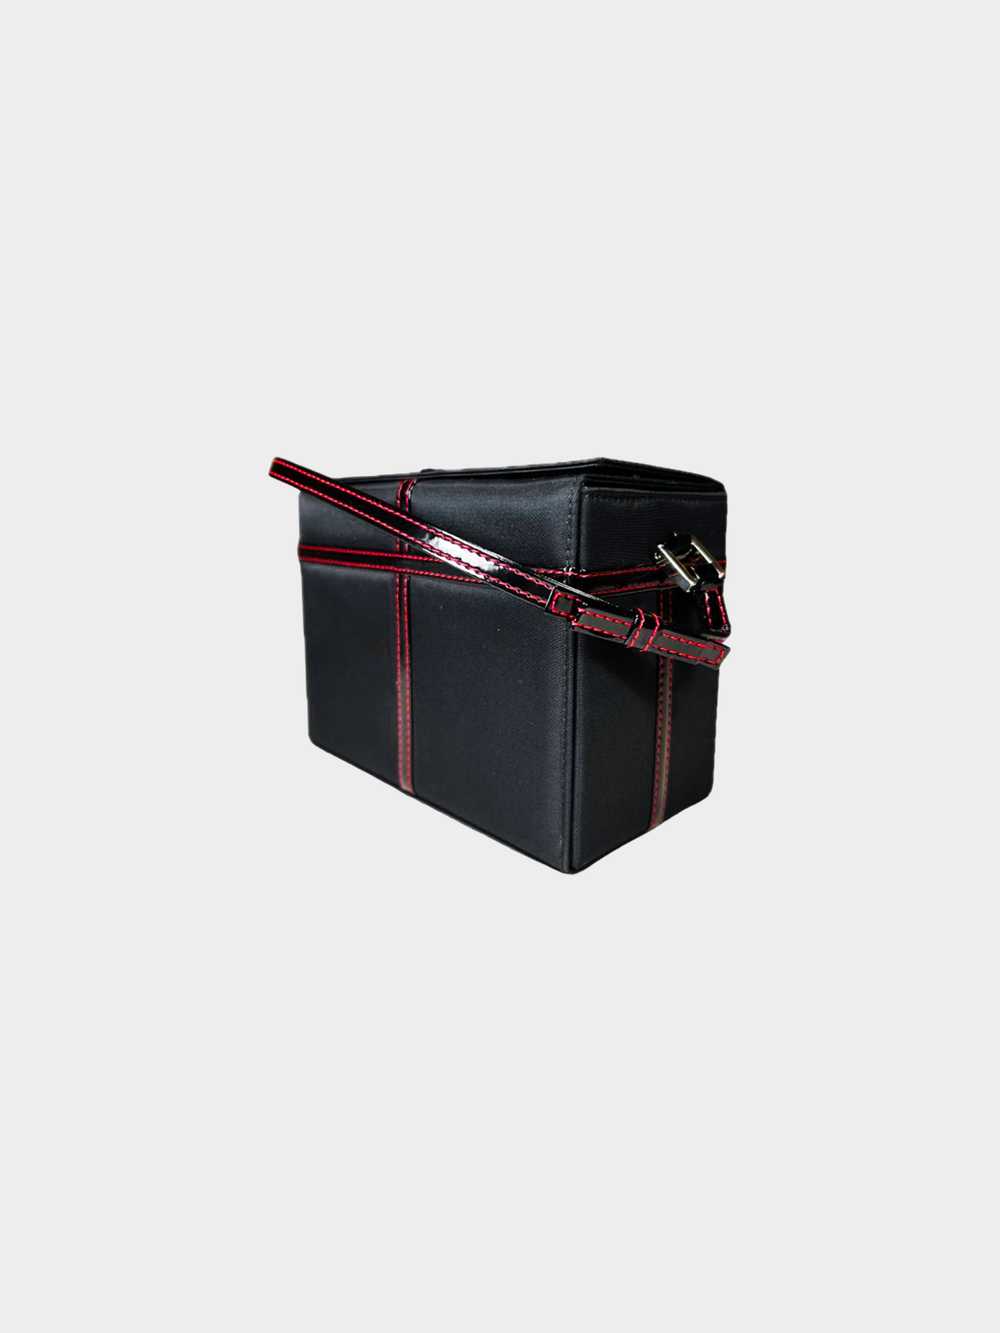 Christian Dior 2006 Black Ribbon Box Vanity Bag - image 2